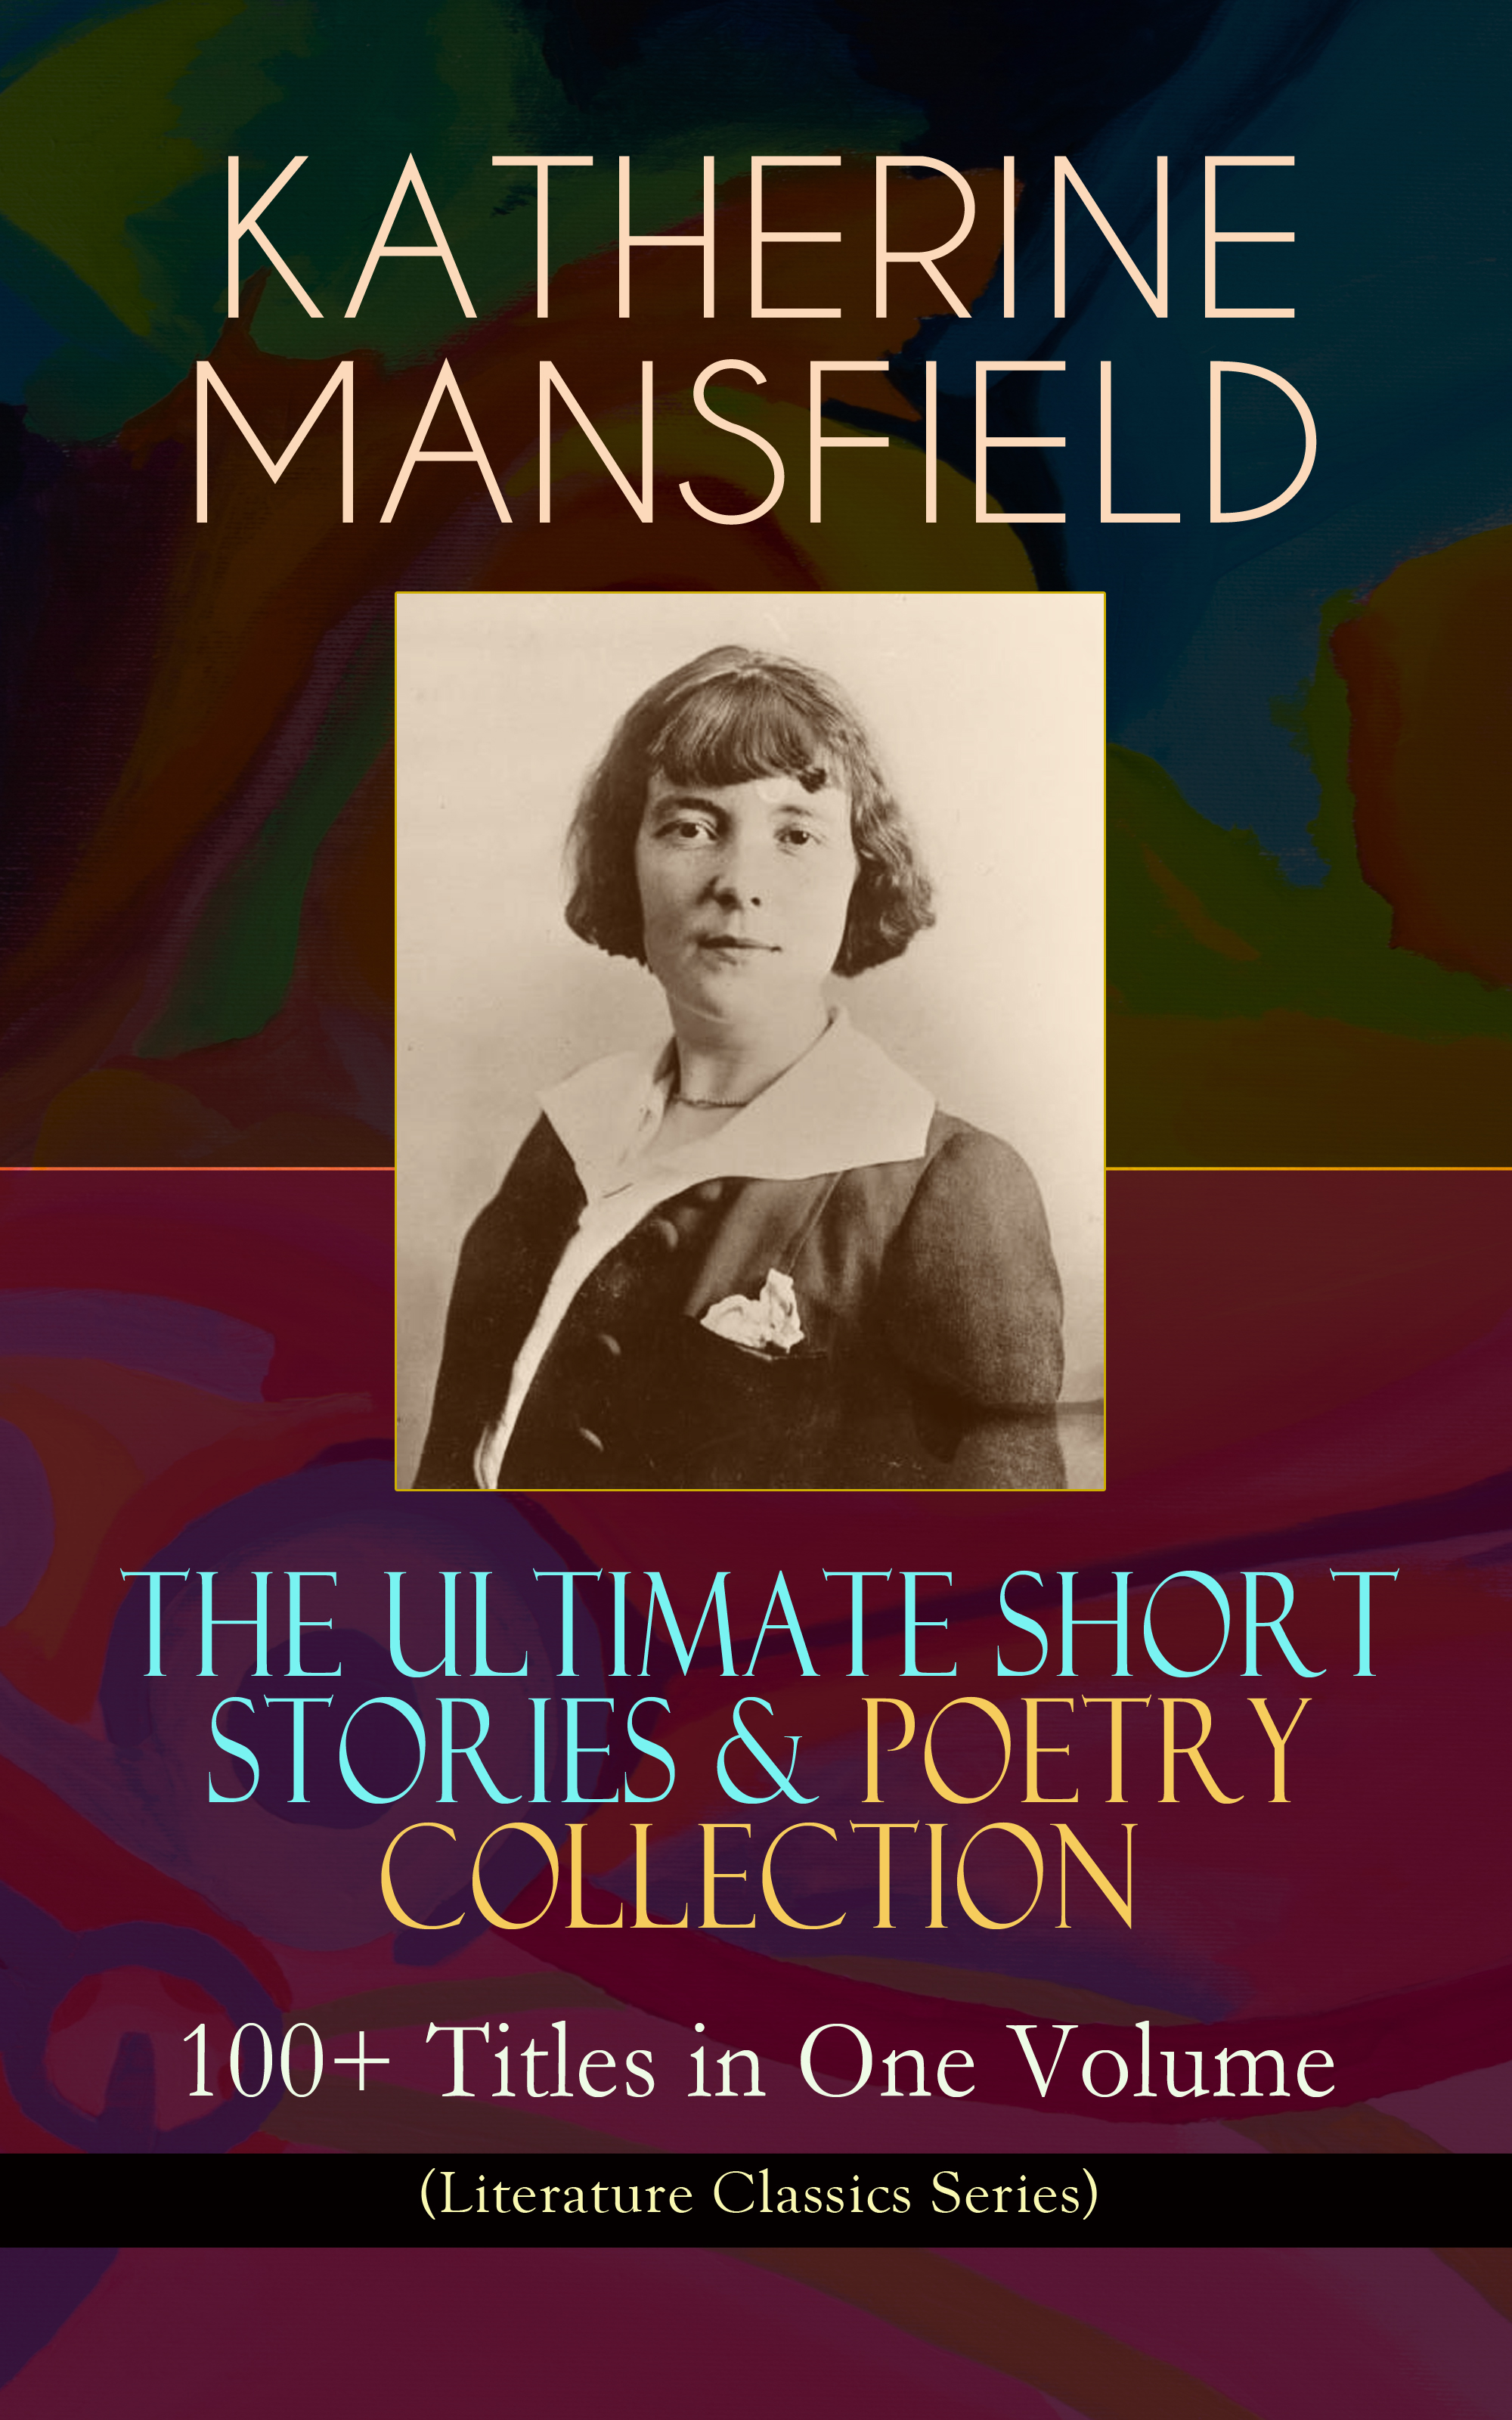 best short stories of katherine mansfield